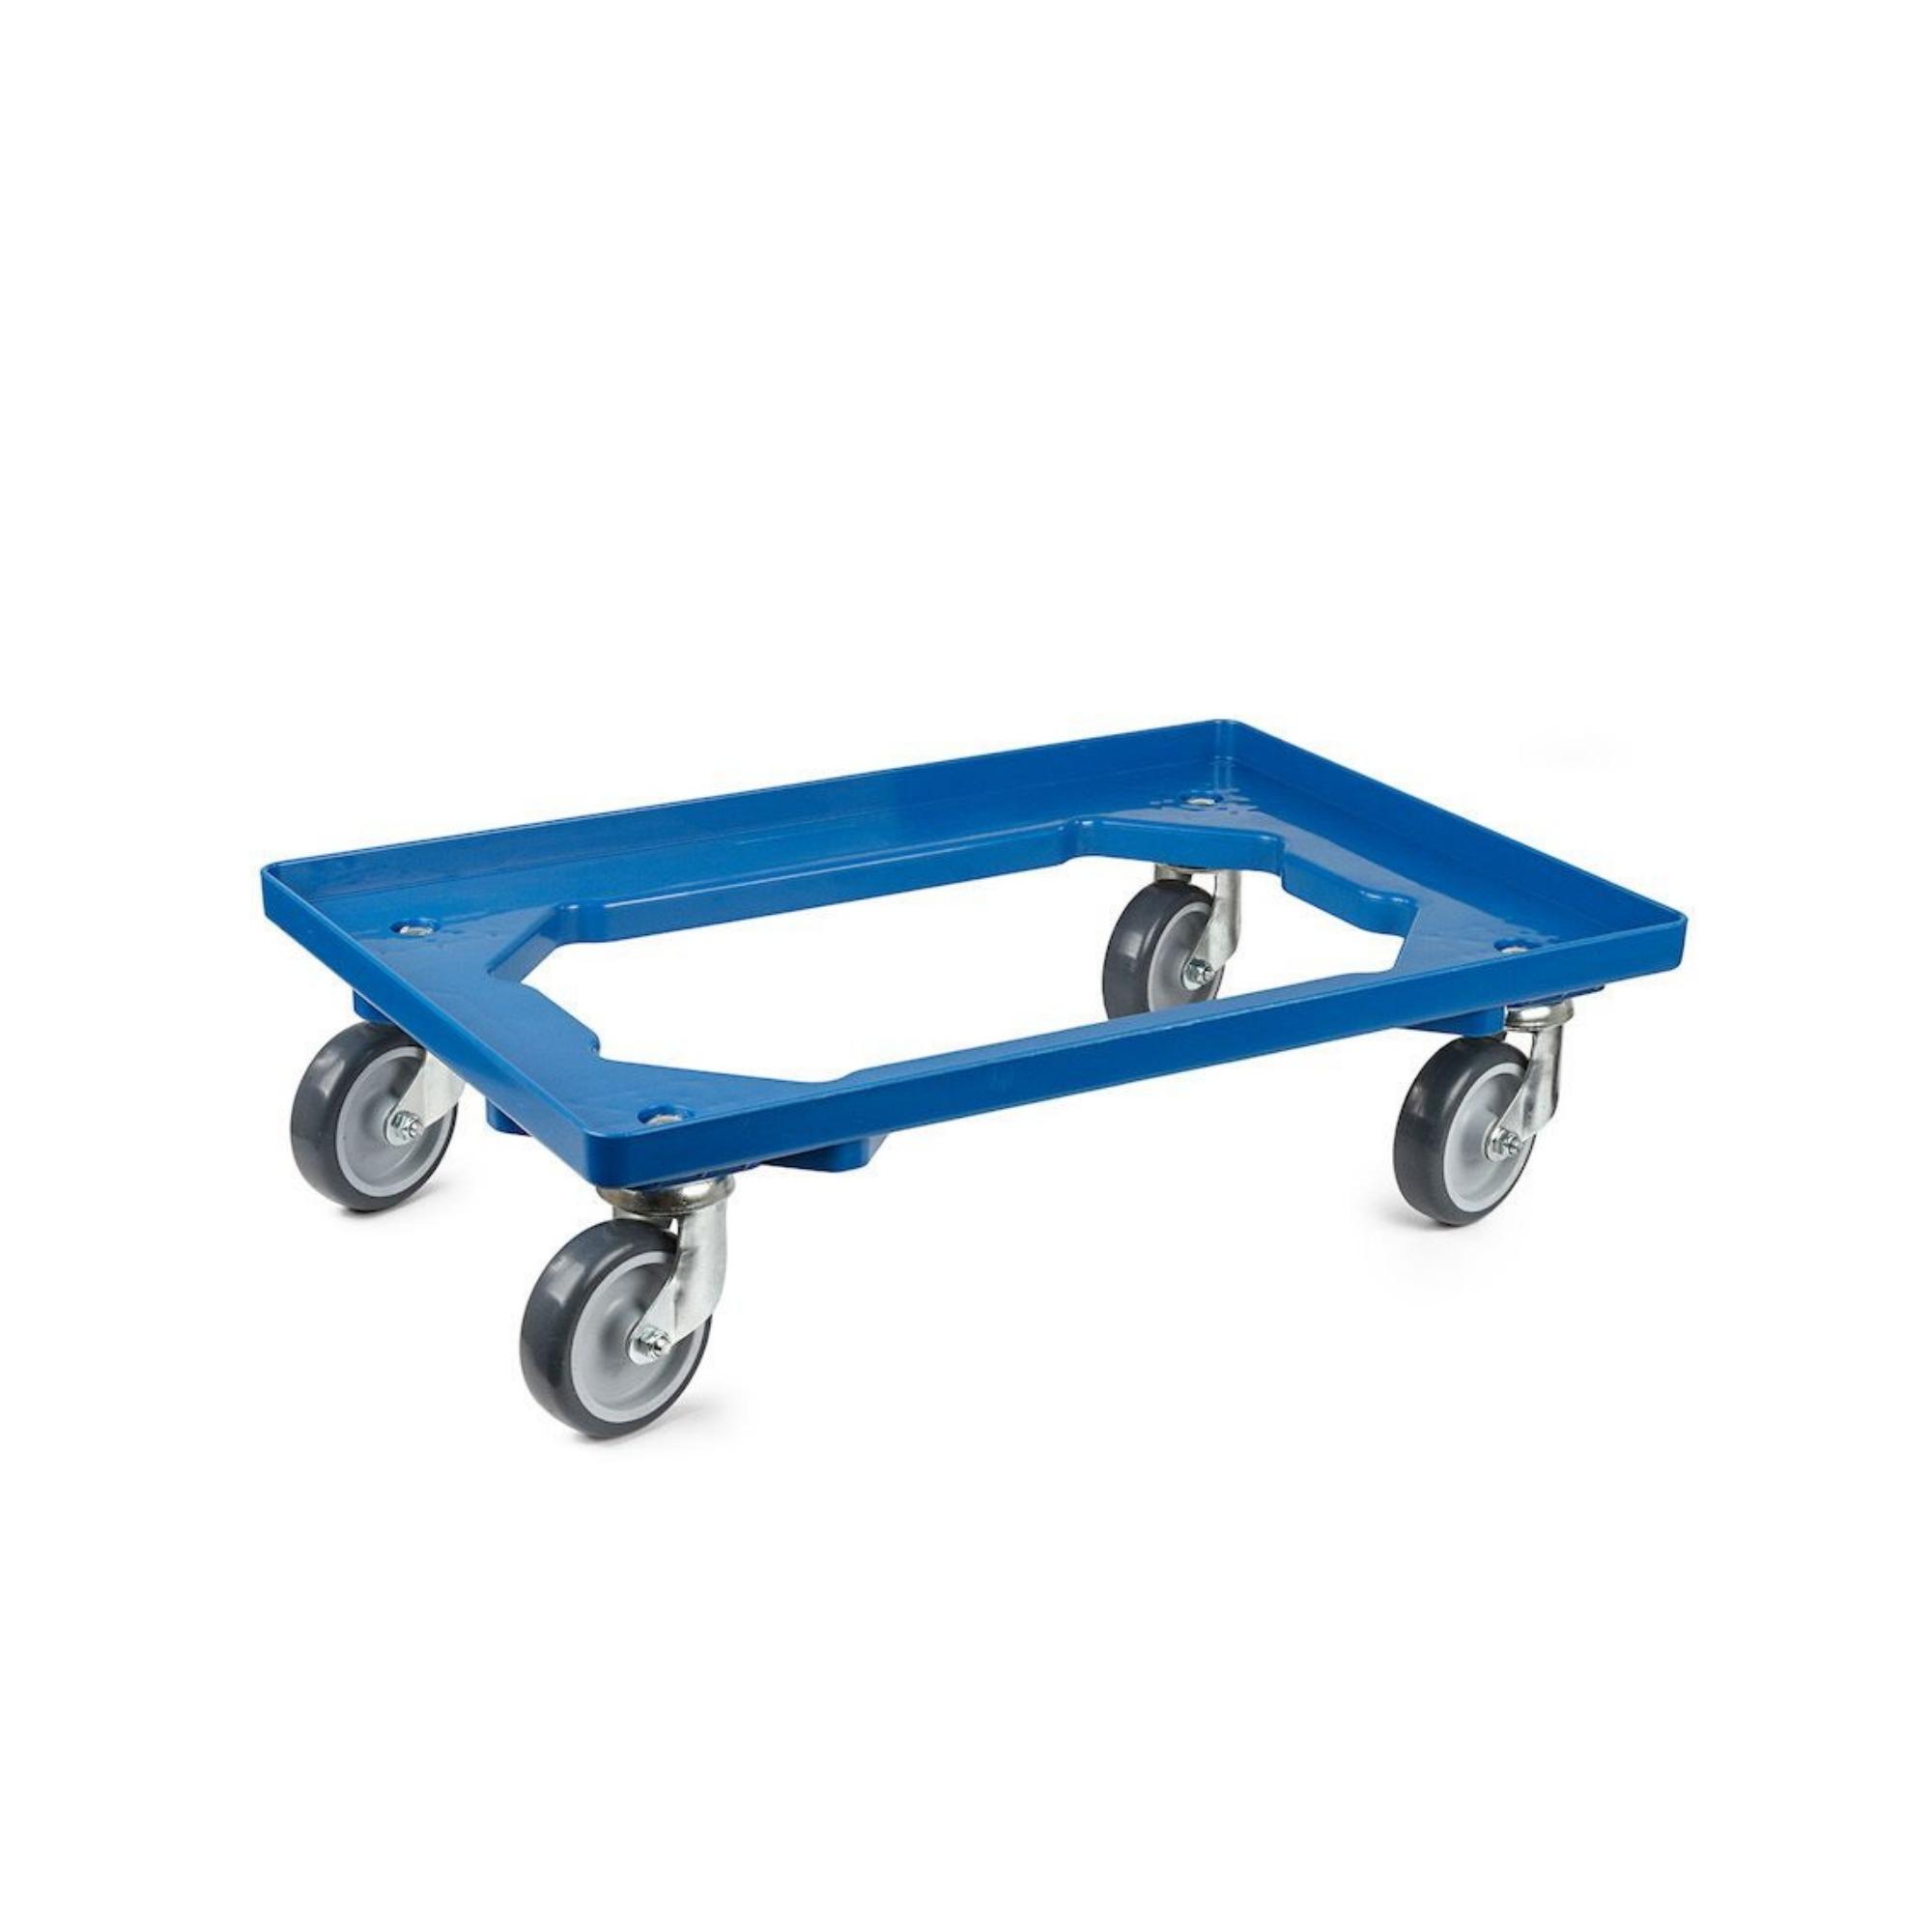 Transportroller für Euroboxen 60x40cm mit Gummiräder blau | Offenes Deck | 2 Lenkrollen & 2 Bremsrollen | Traglast 300kg | Kistenroller Logistikroller Rollwagen Profi-Fahrgestell